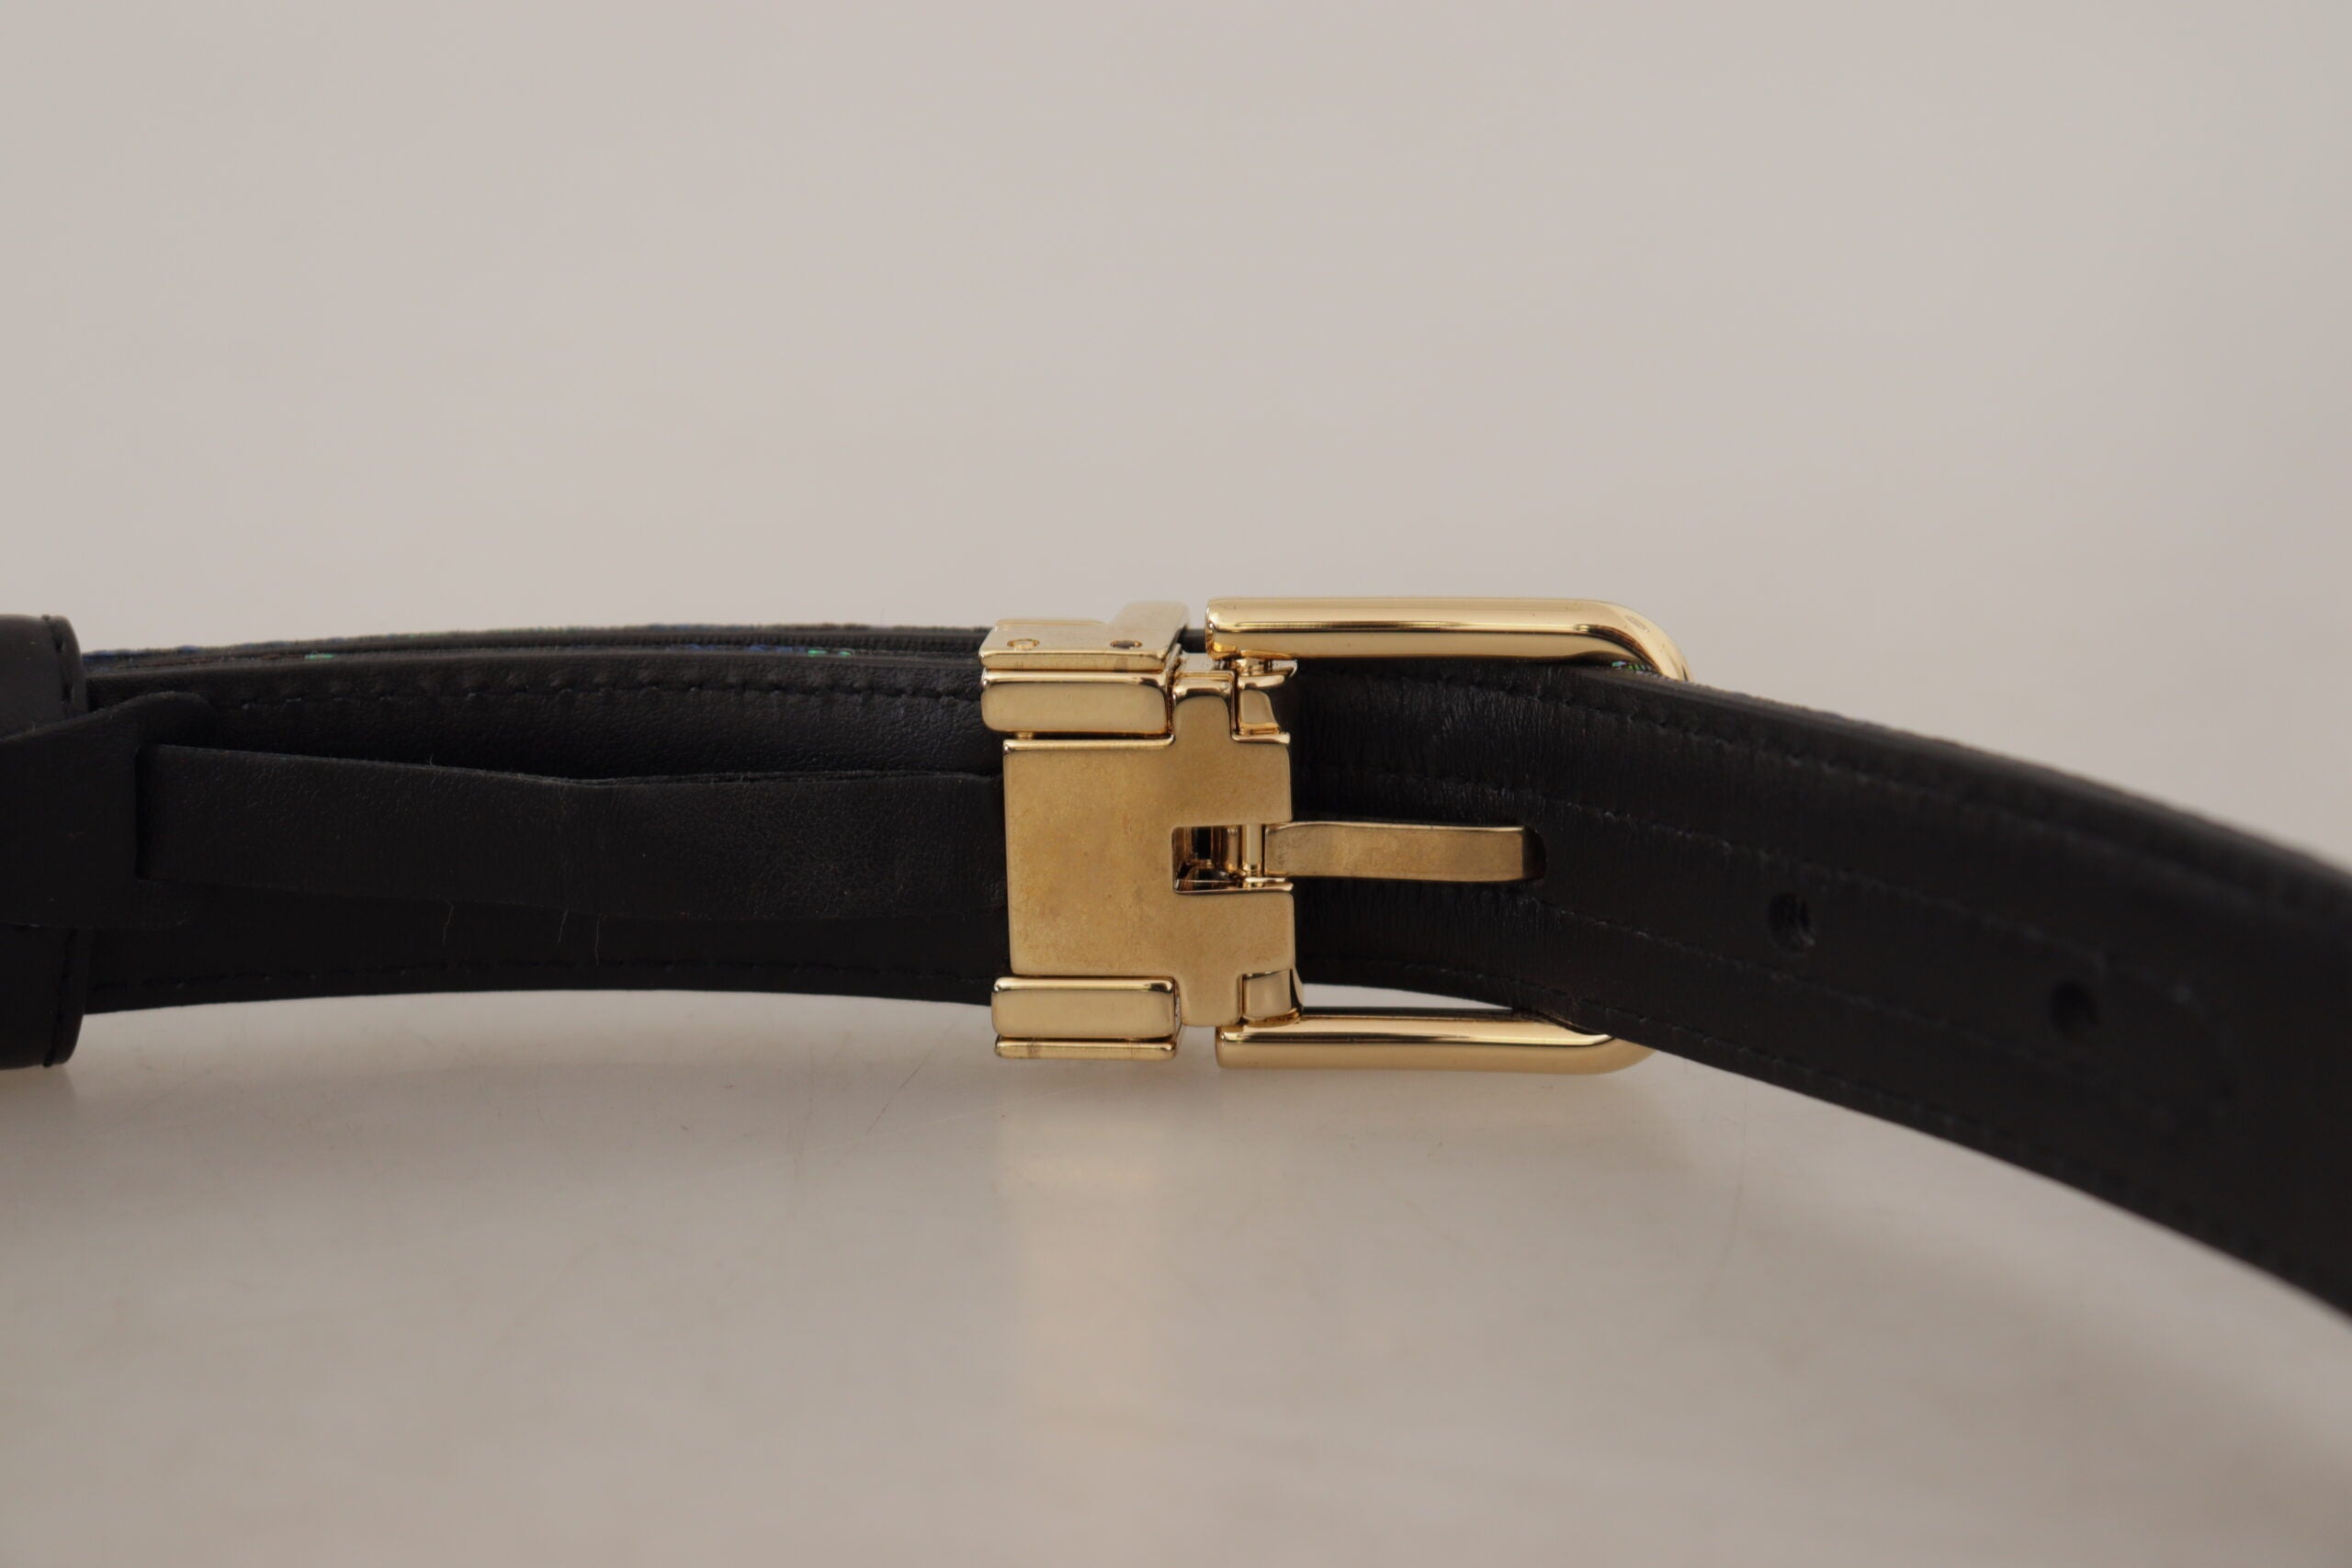 Dolce & Gabbana Elegant Multicolor Leather Belt with Gold Buckle